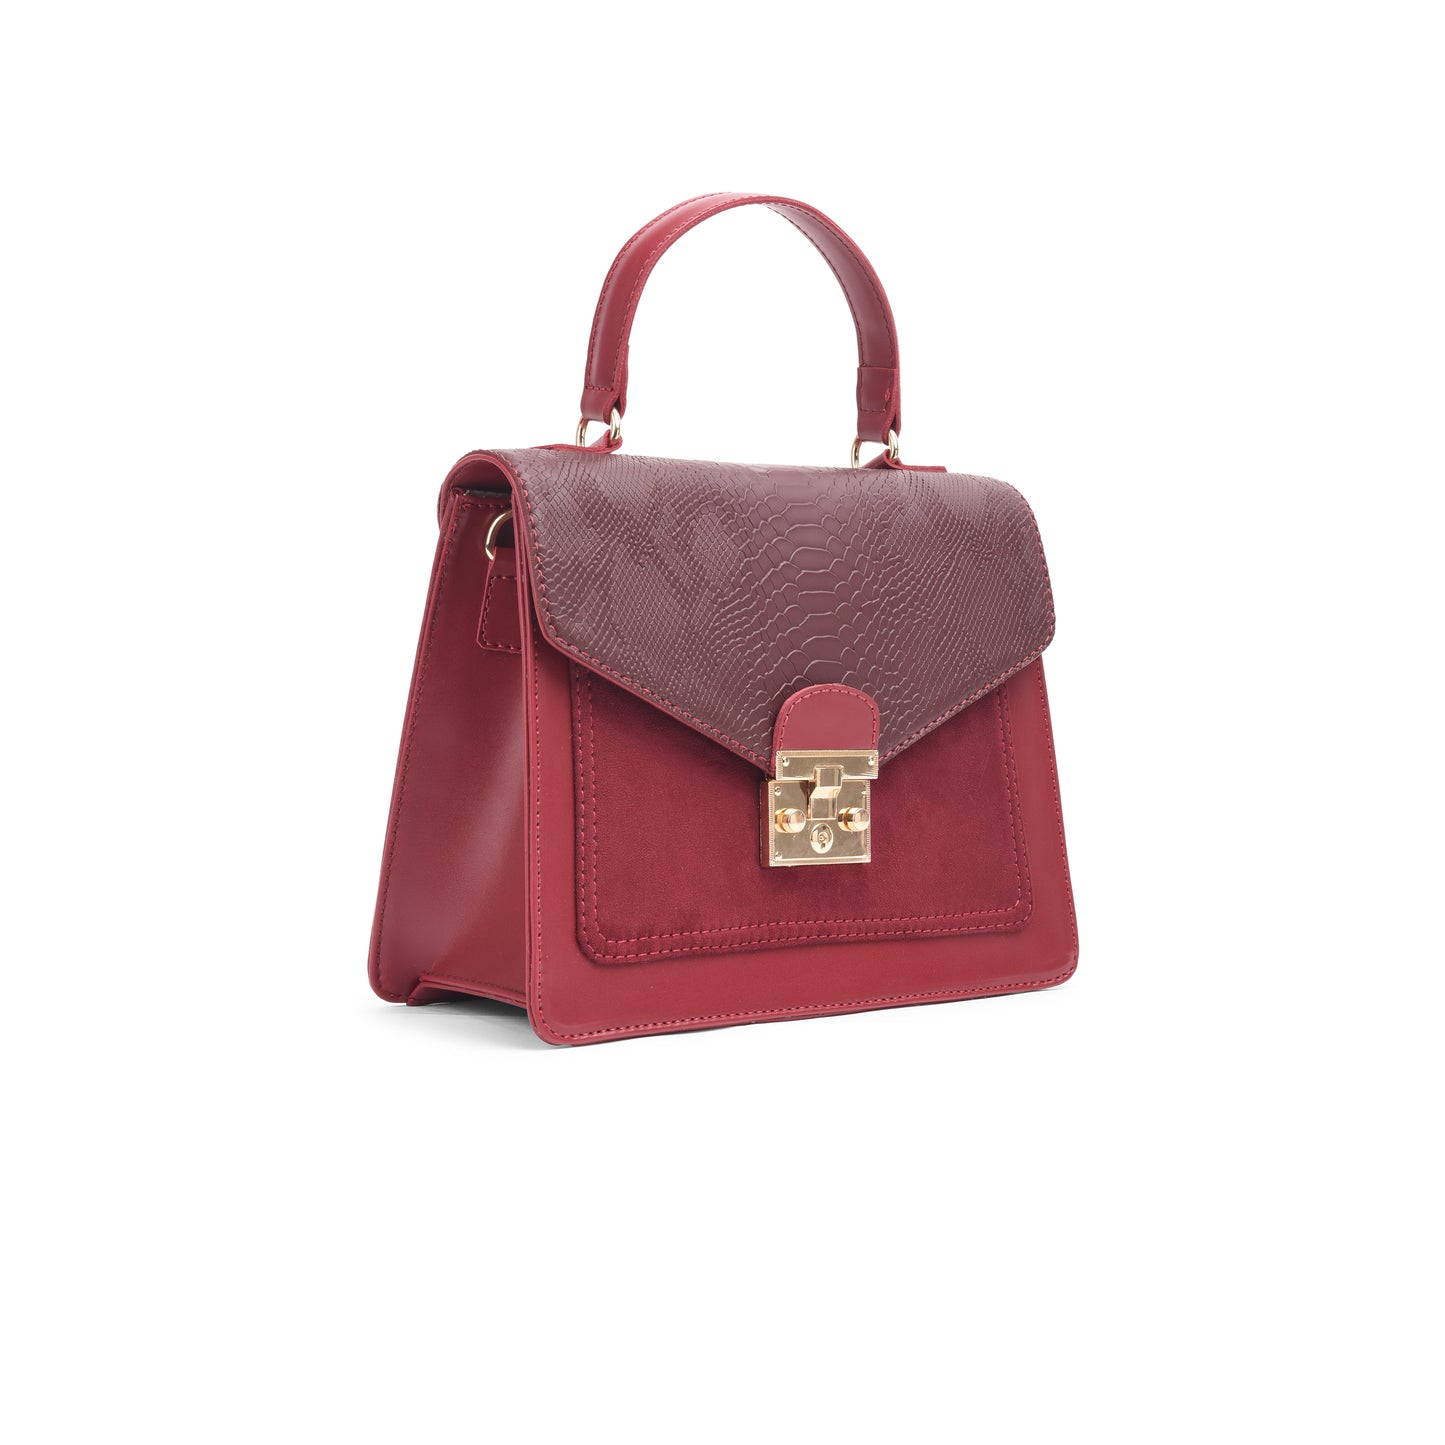 Burgundy Handbag with crocodile Texture leather - Code 900